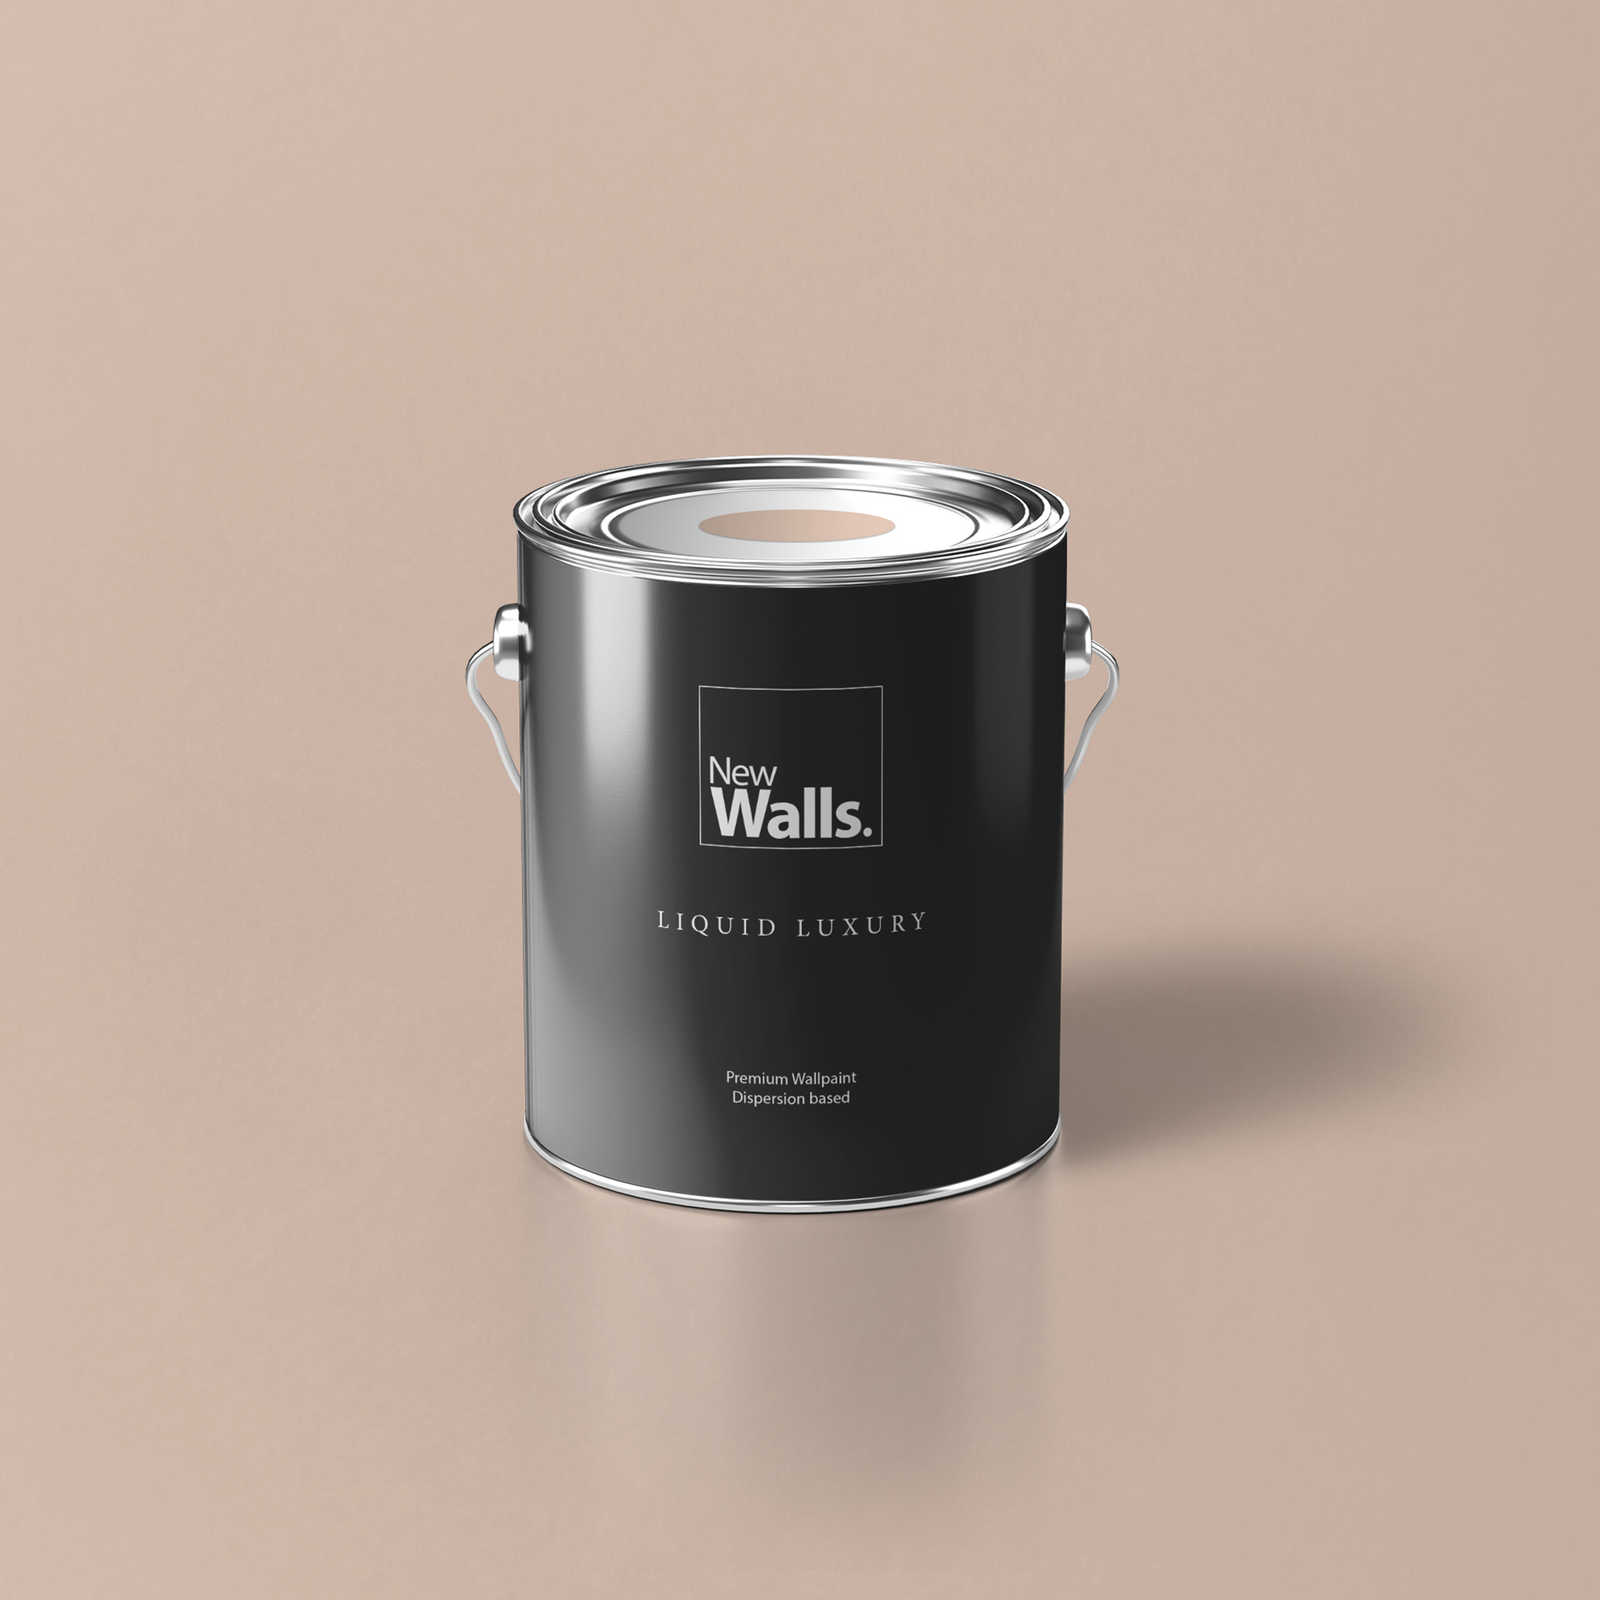 Premium Wall Paint serene sand »Luxury Lipstick« NW1003 – 2.5 litre
